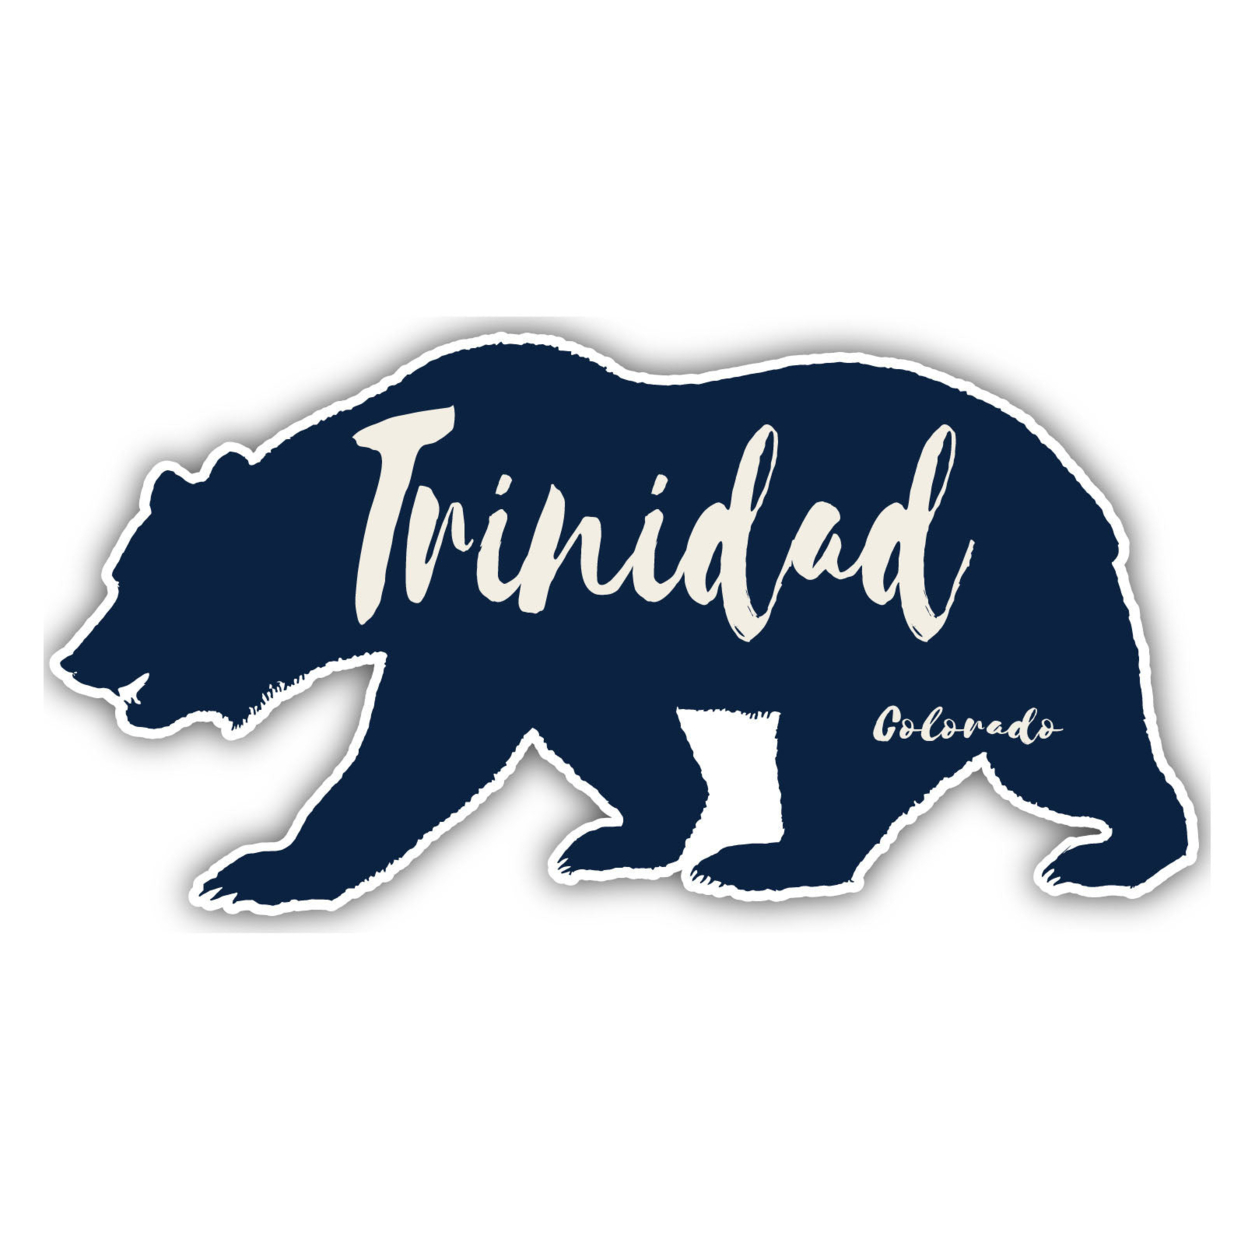 Trinidad Colorado Souvenir Decorative Stickers (Choose Theme And Size) - Single Unit, 4-Inch, Adventures Awaits